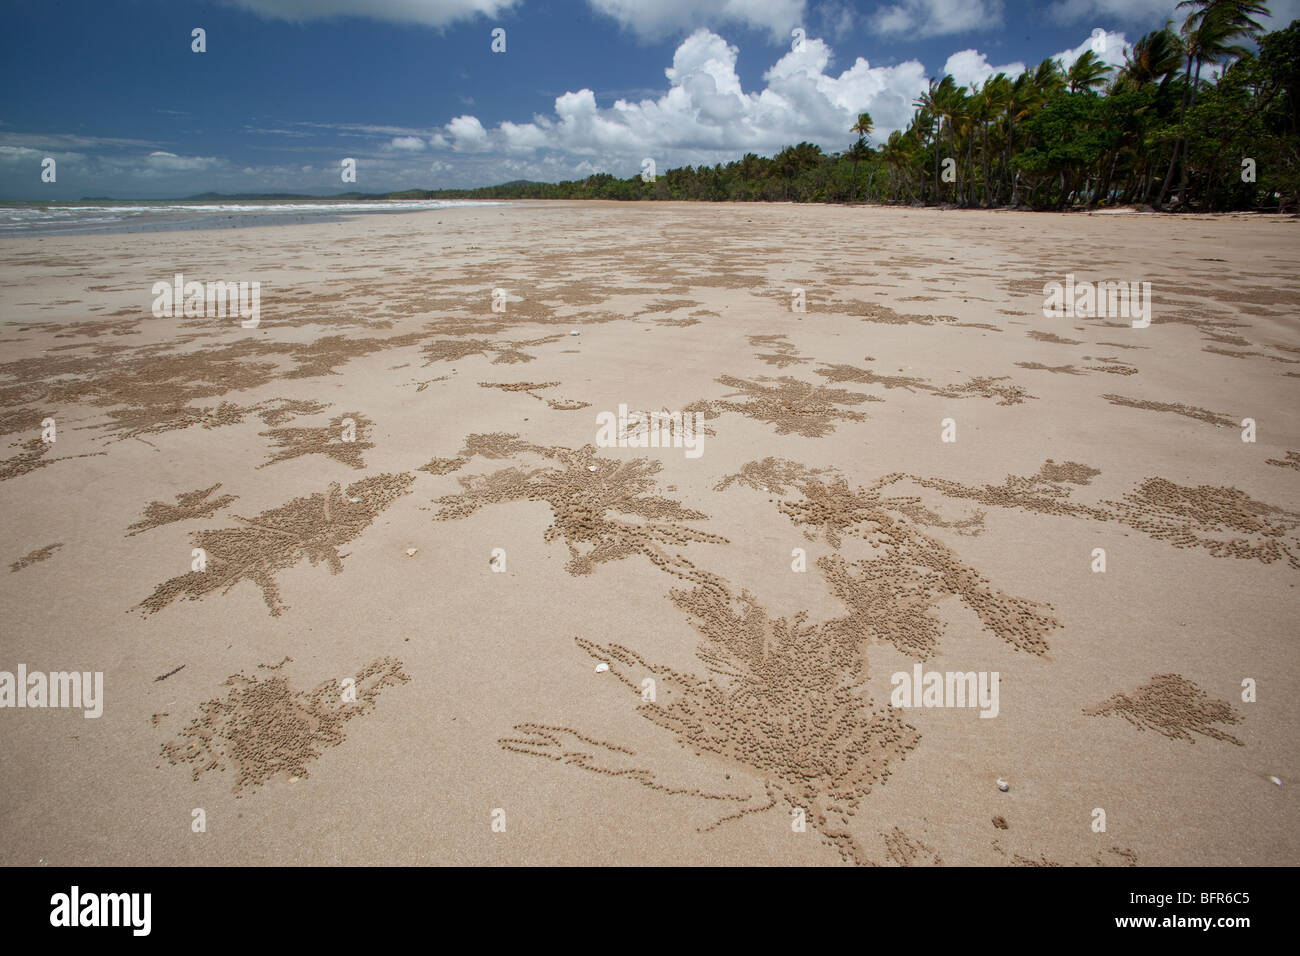 Ghost crab burrows, Mission Beach, near Cairns, Queensland, Australia Stock Photo